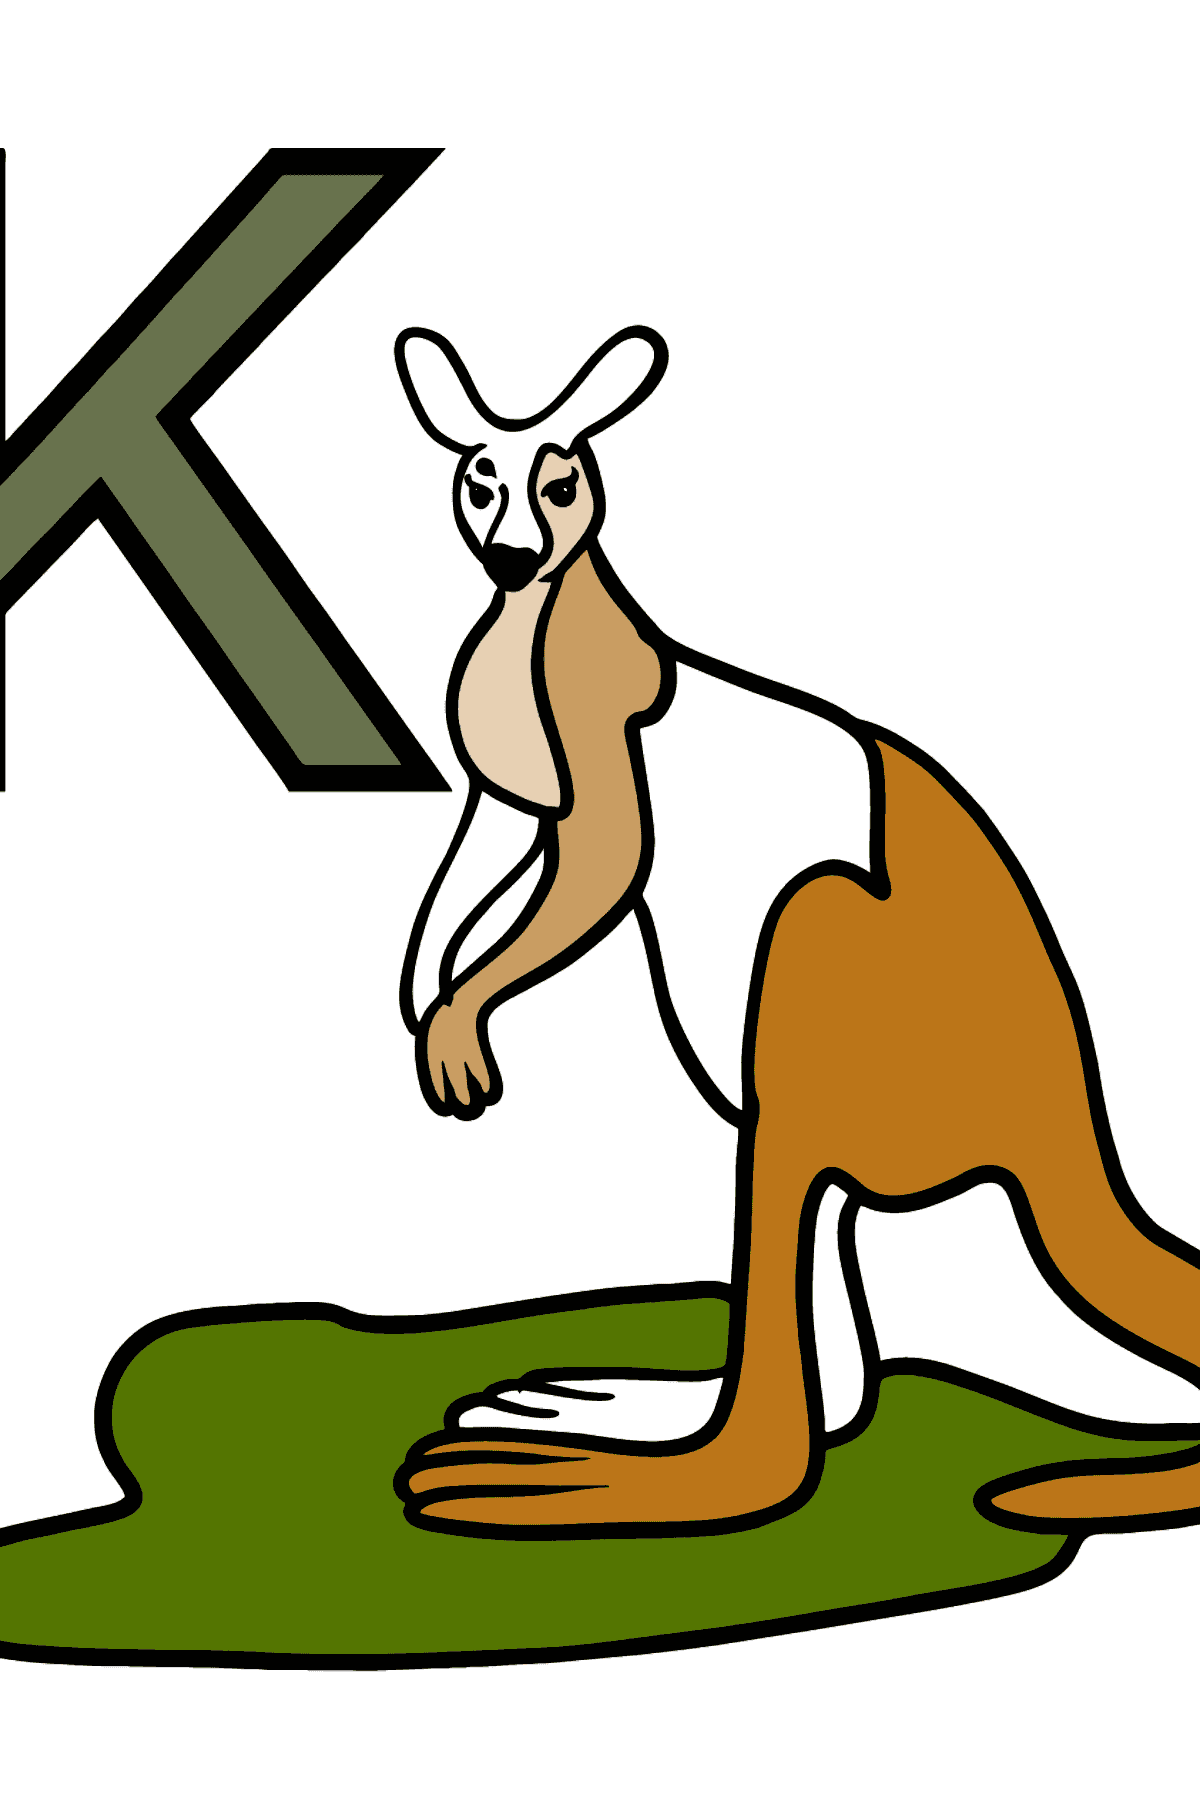 Буква K Раскраска Английский алфавит - KANGAROO - Картинки для Детей